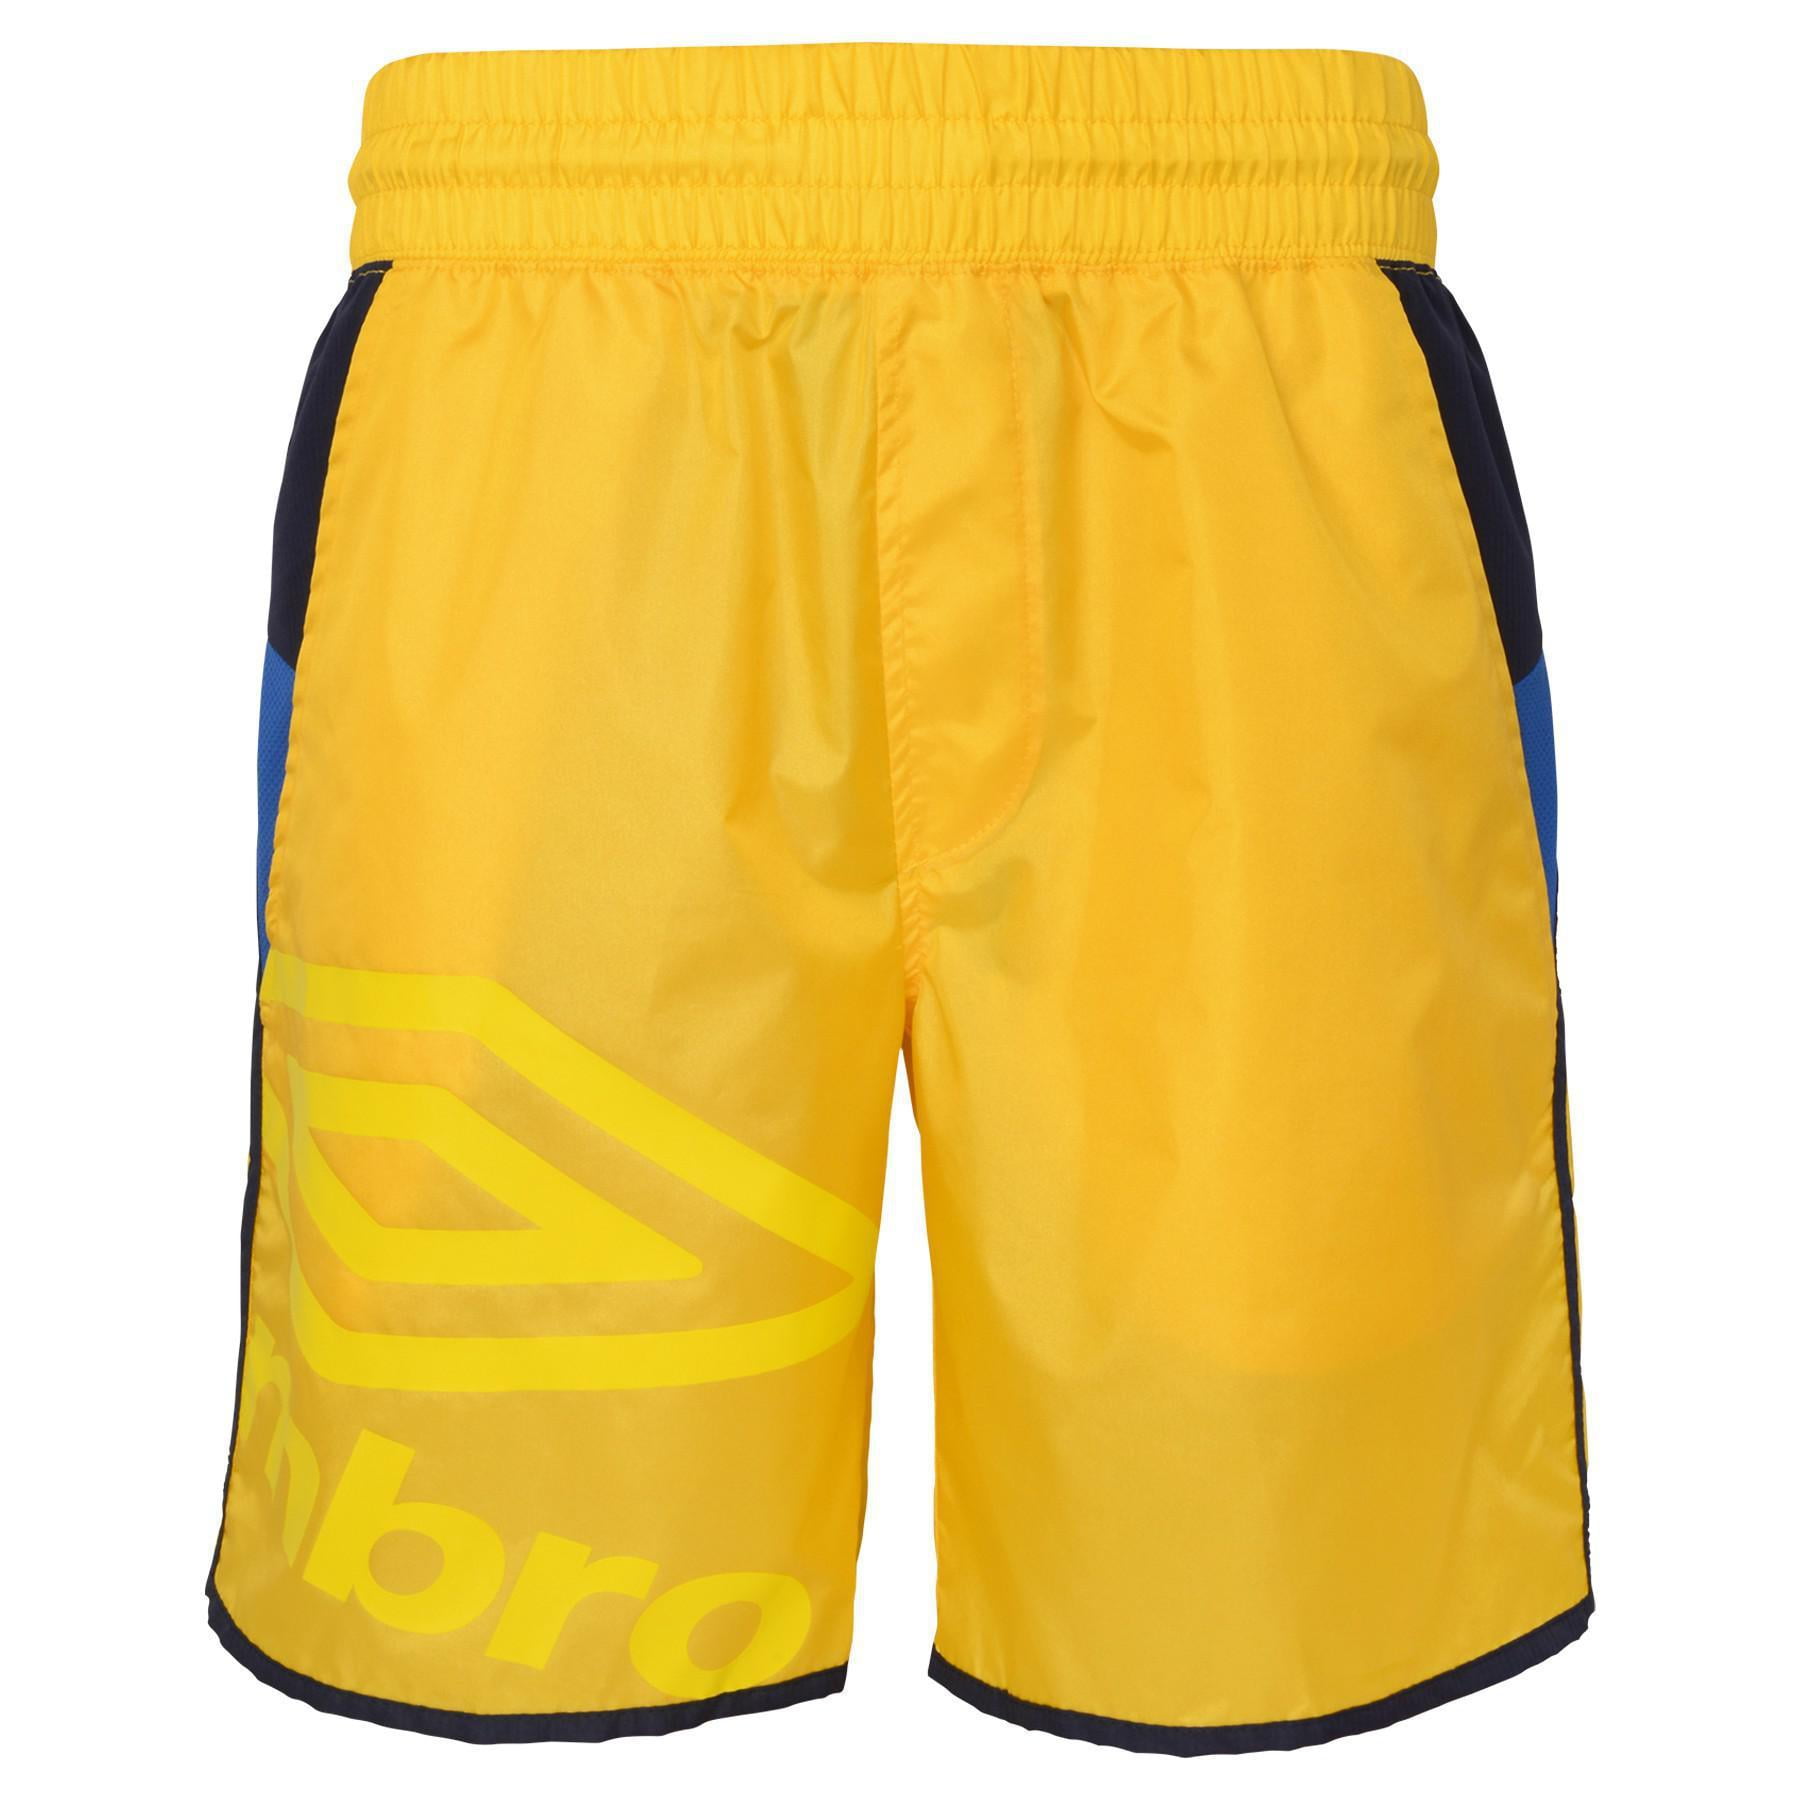 Umbro Men's Trainers Shorts, Golden - Walmart.com